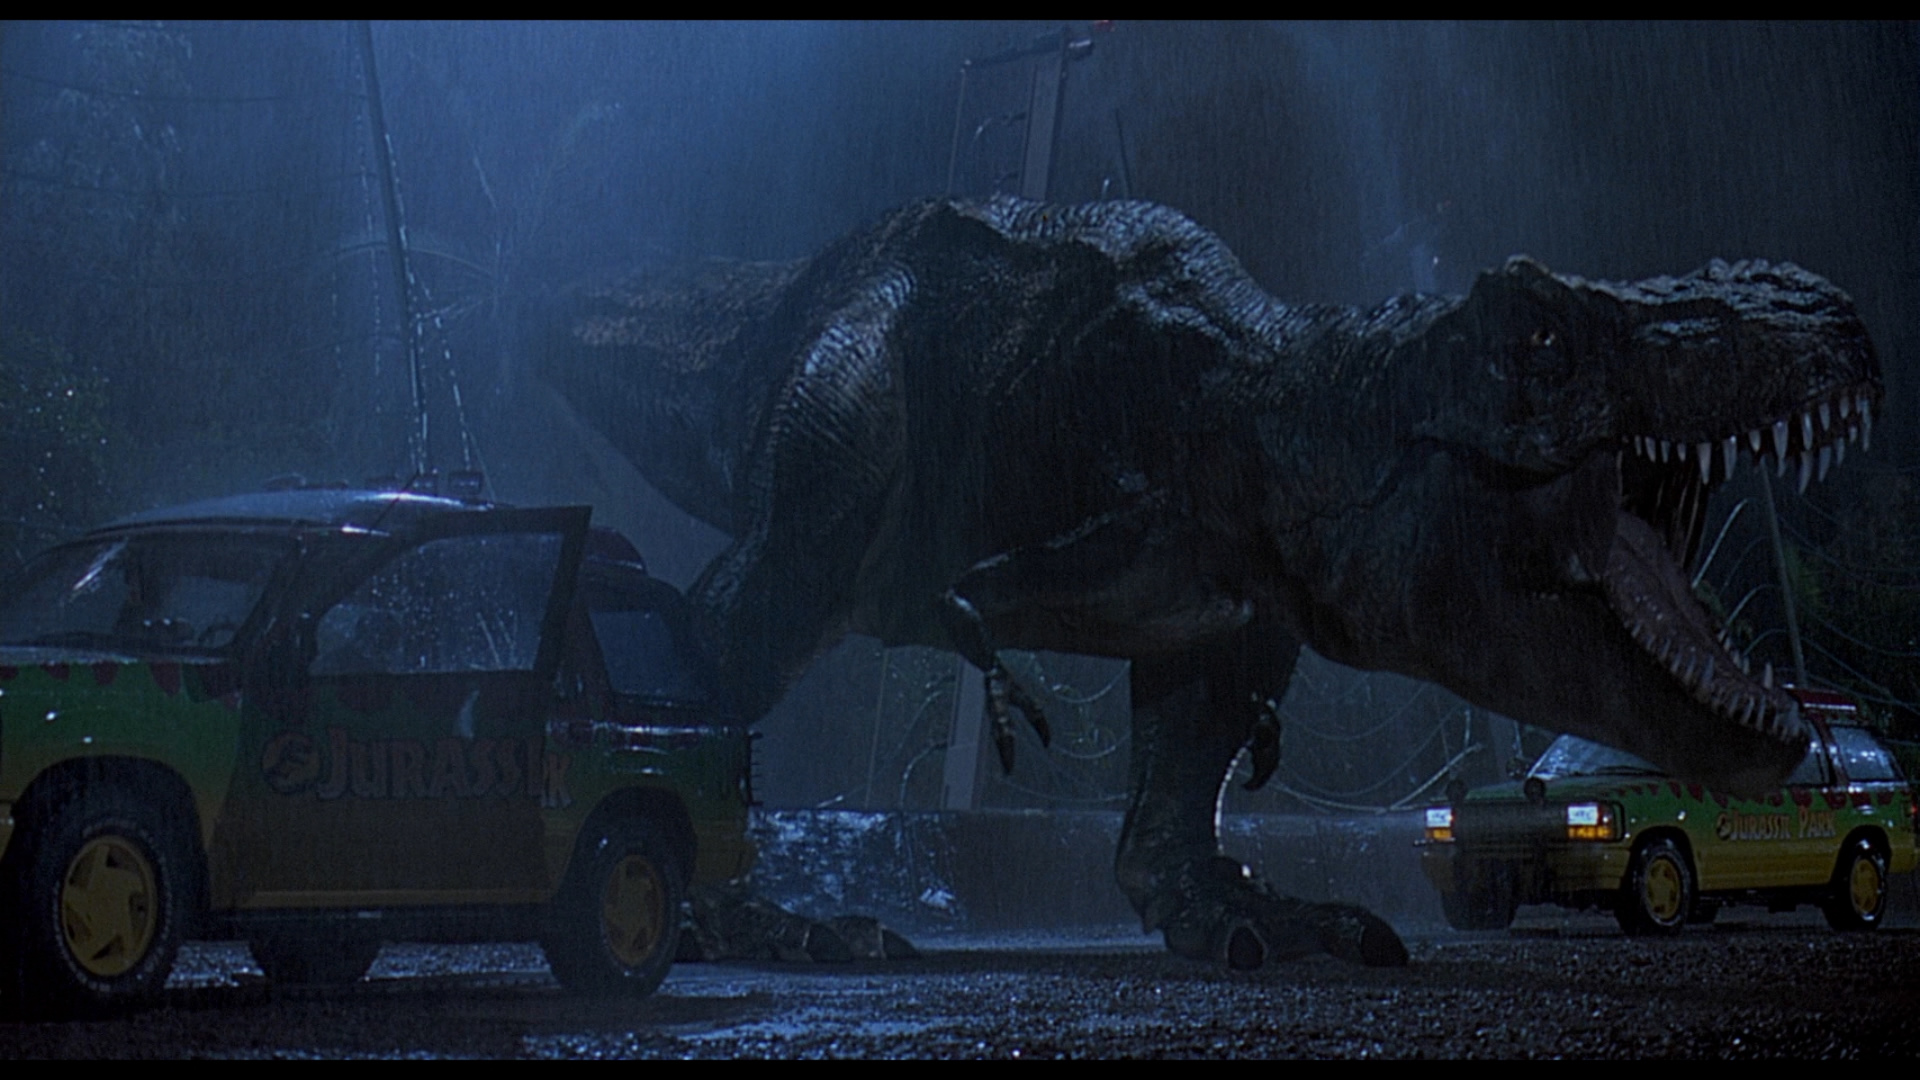 Jurassic World hd 1080p blu-ray  movie